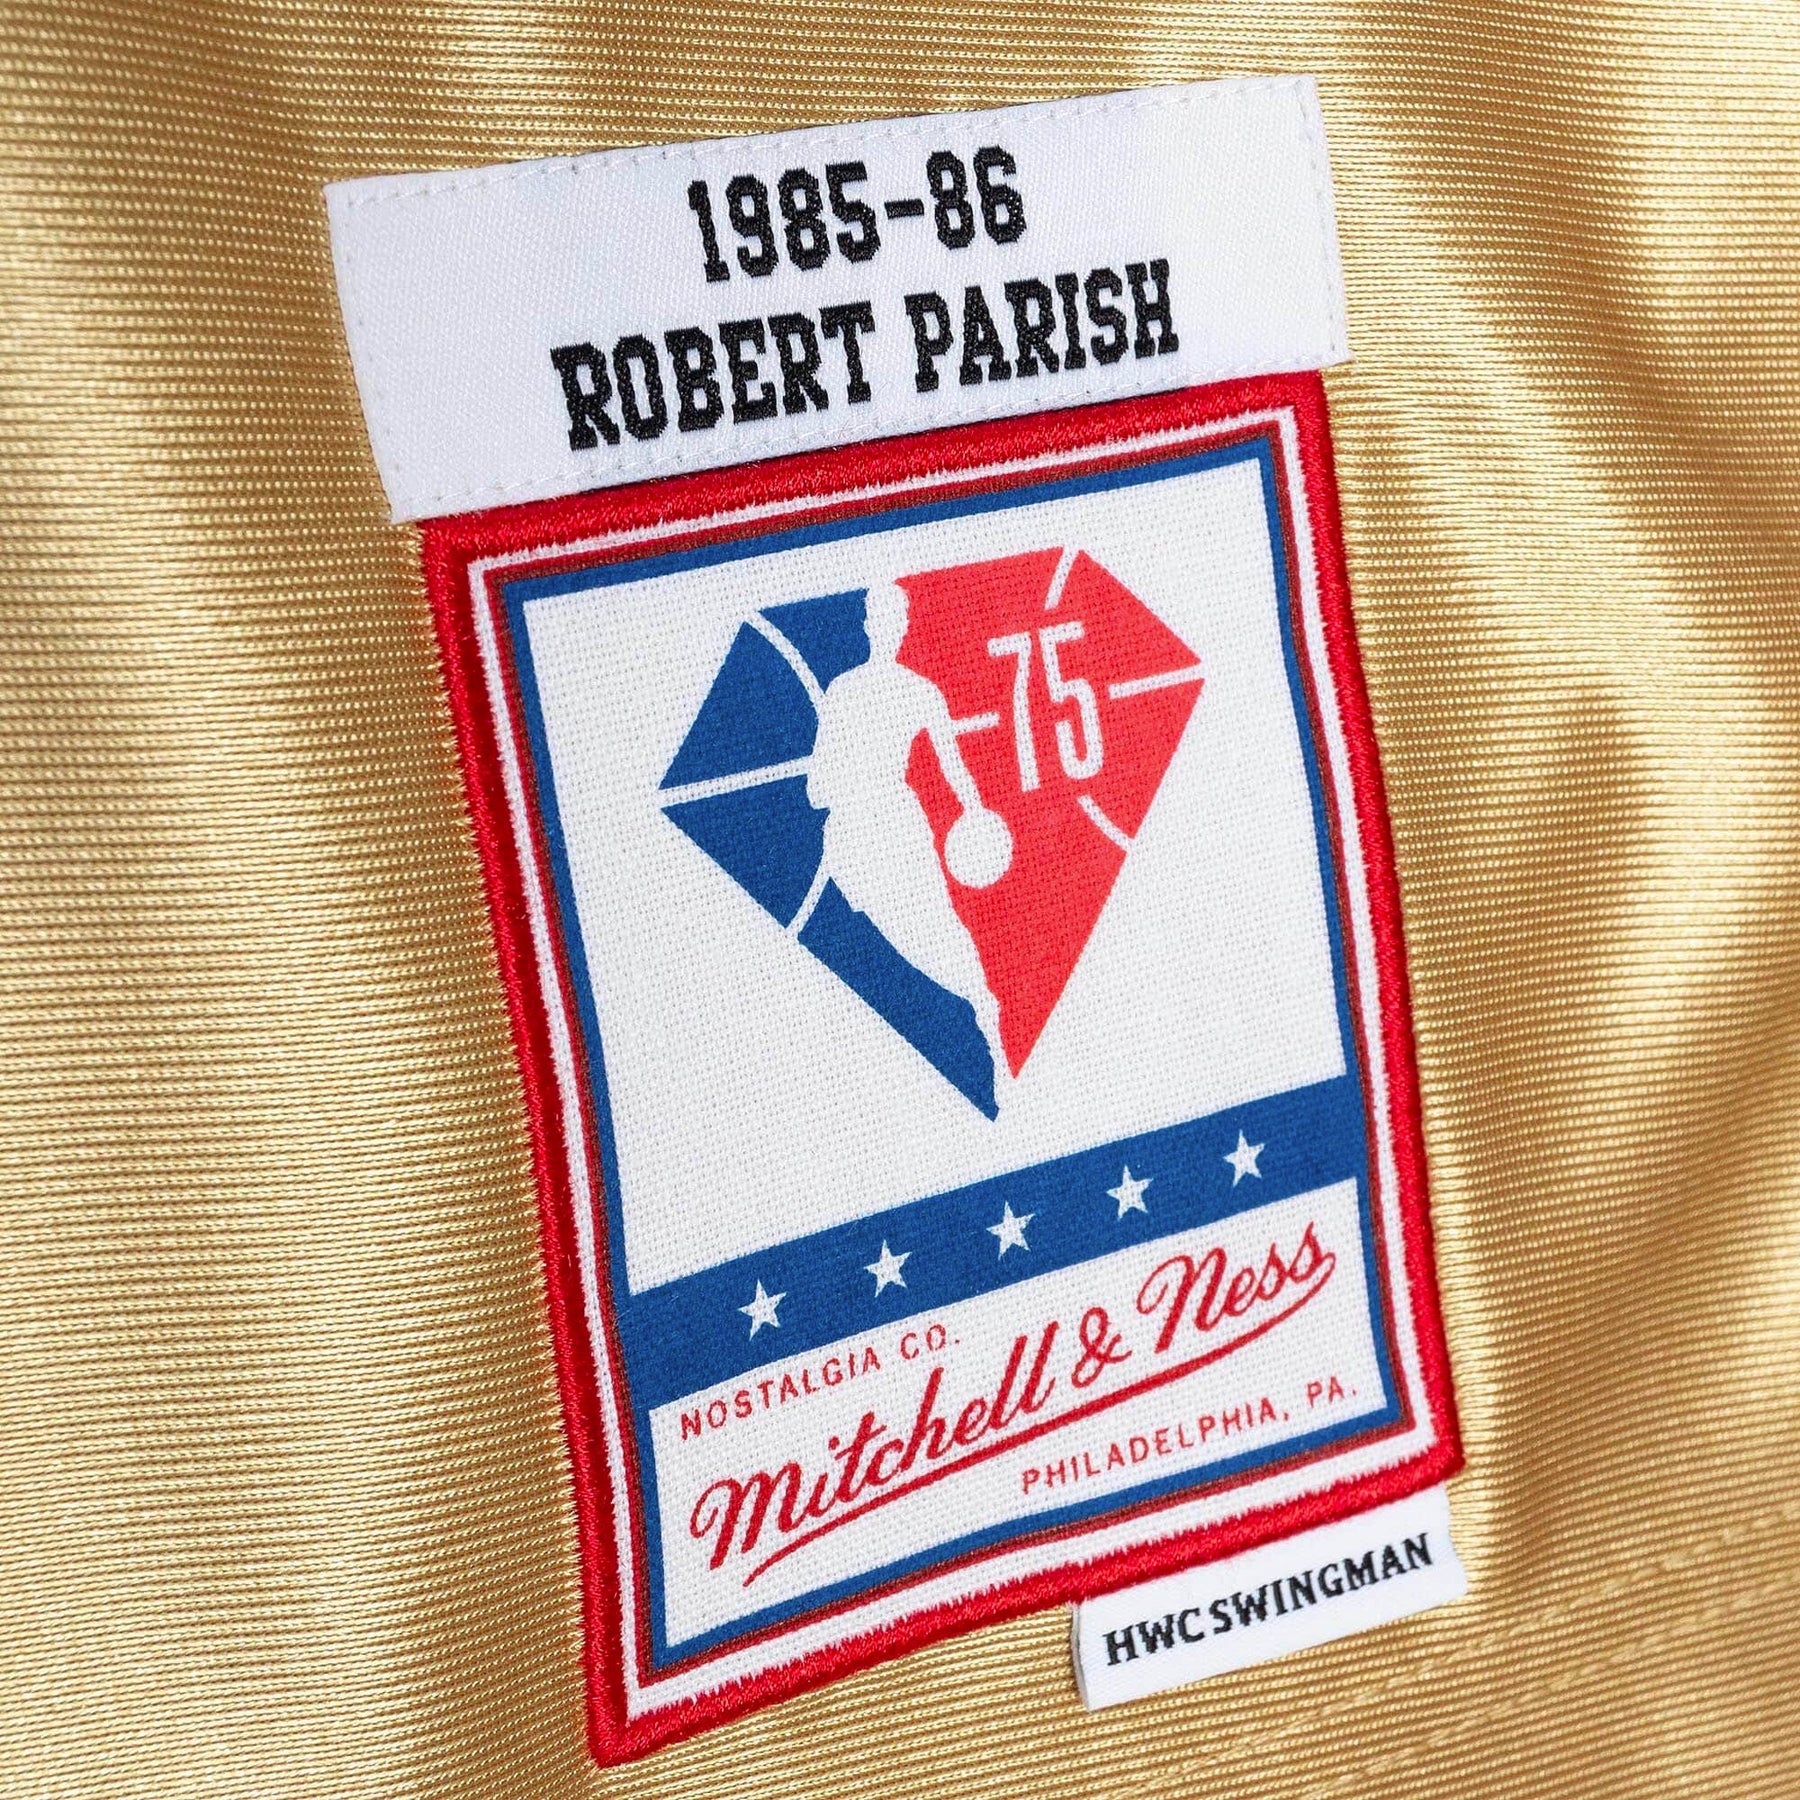 Mitchell & Ness 75th Anniversary Gold Swingman Larry Bird Boston Celtics 1985-86 Jersey